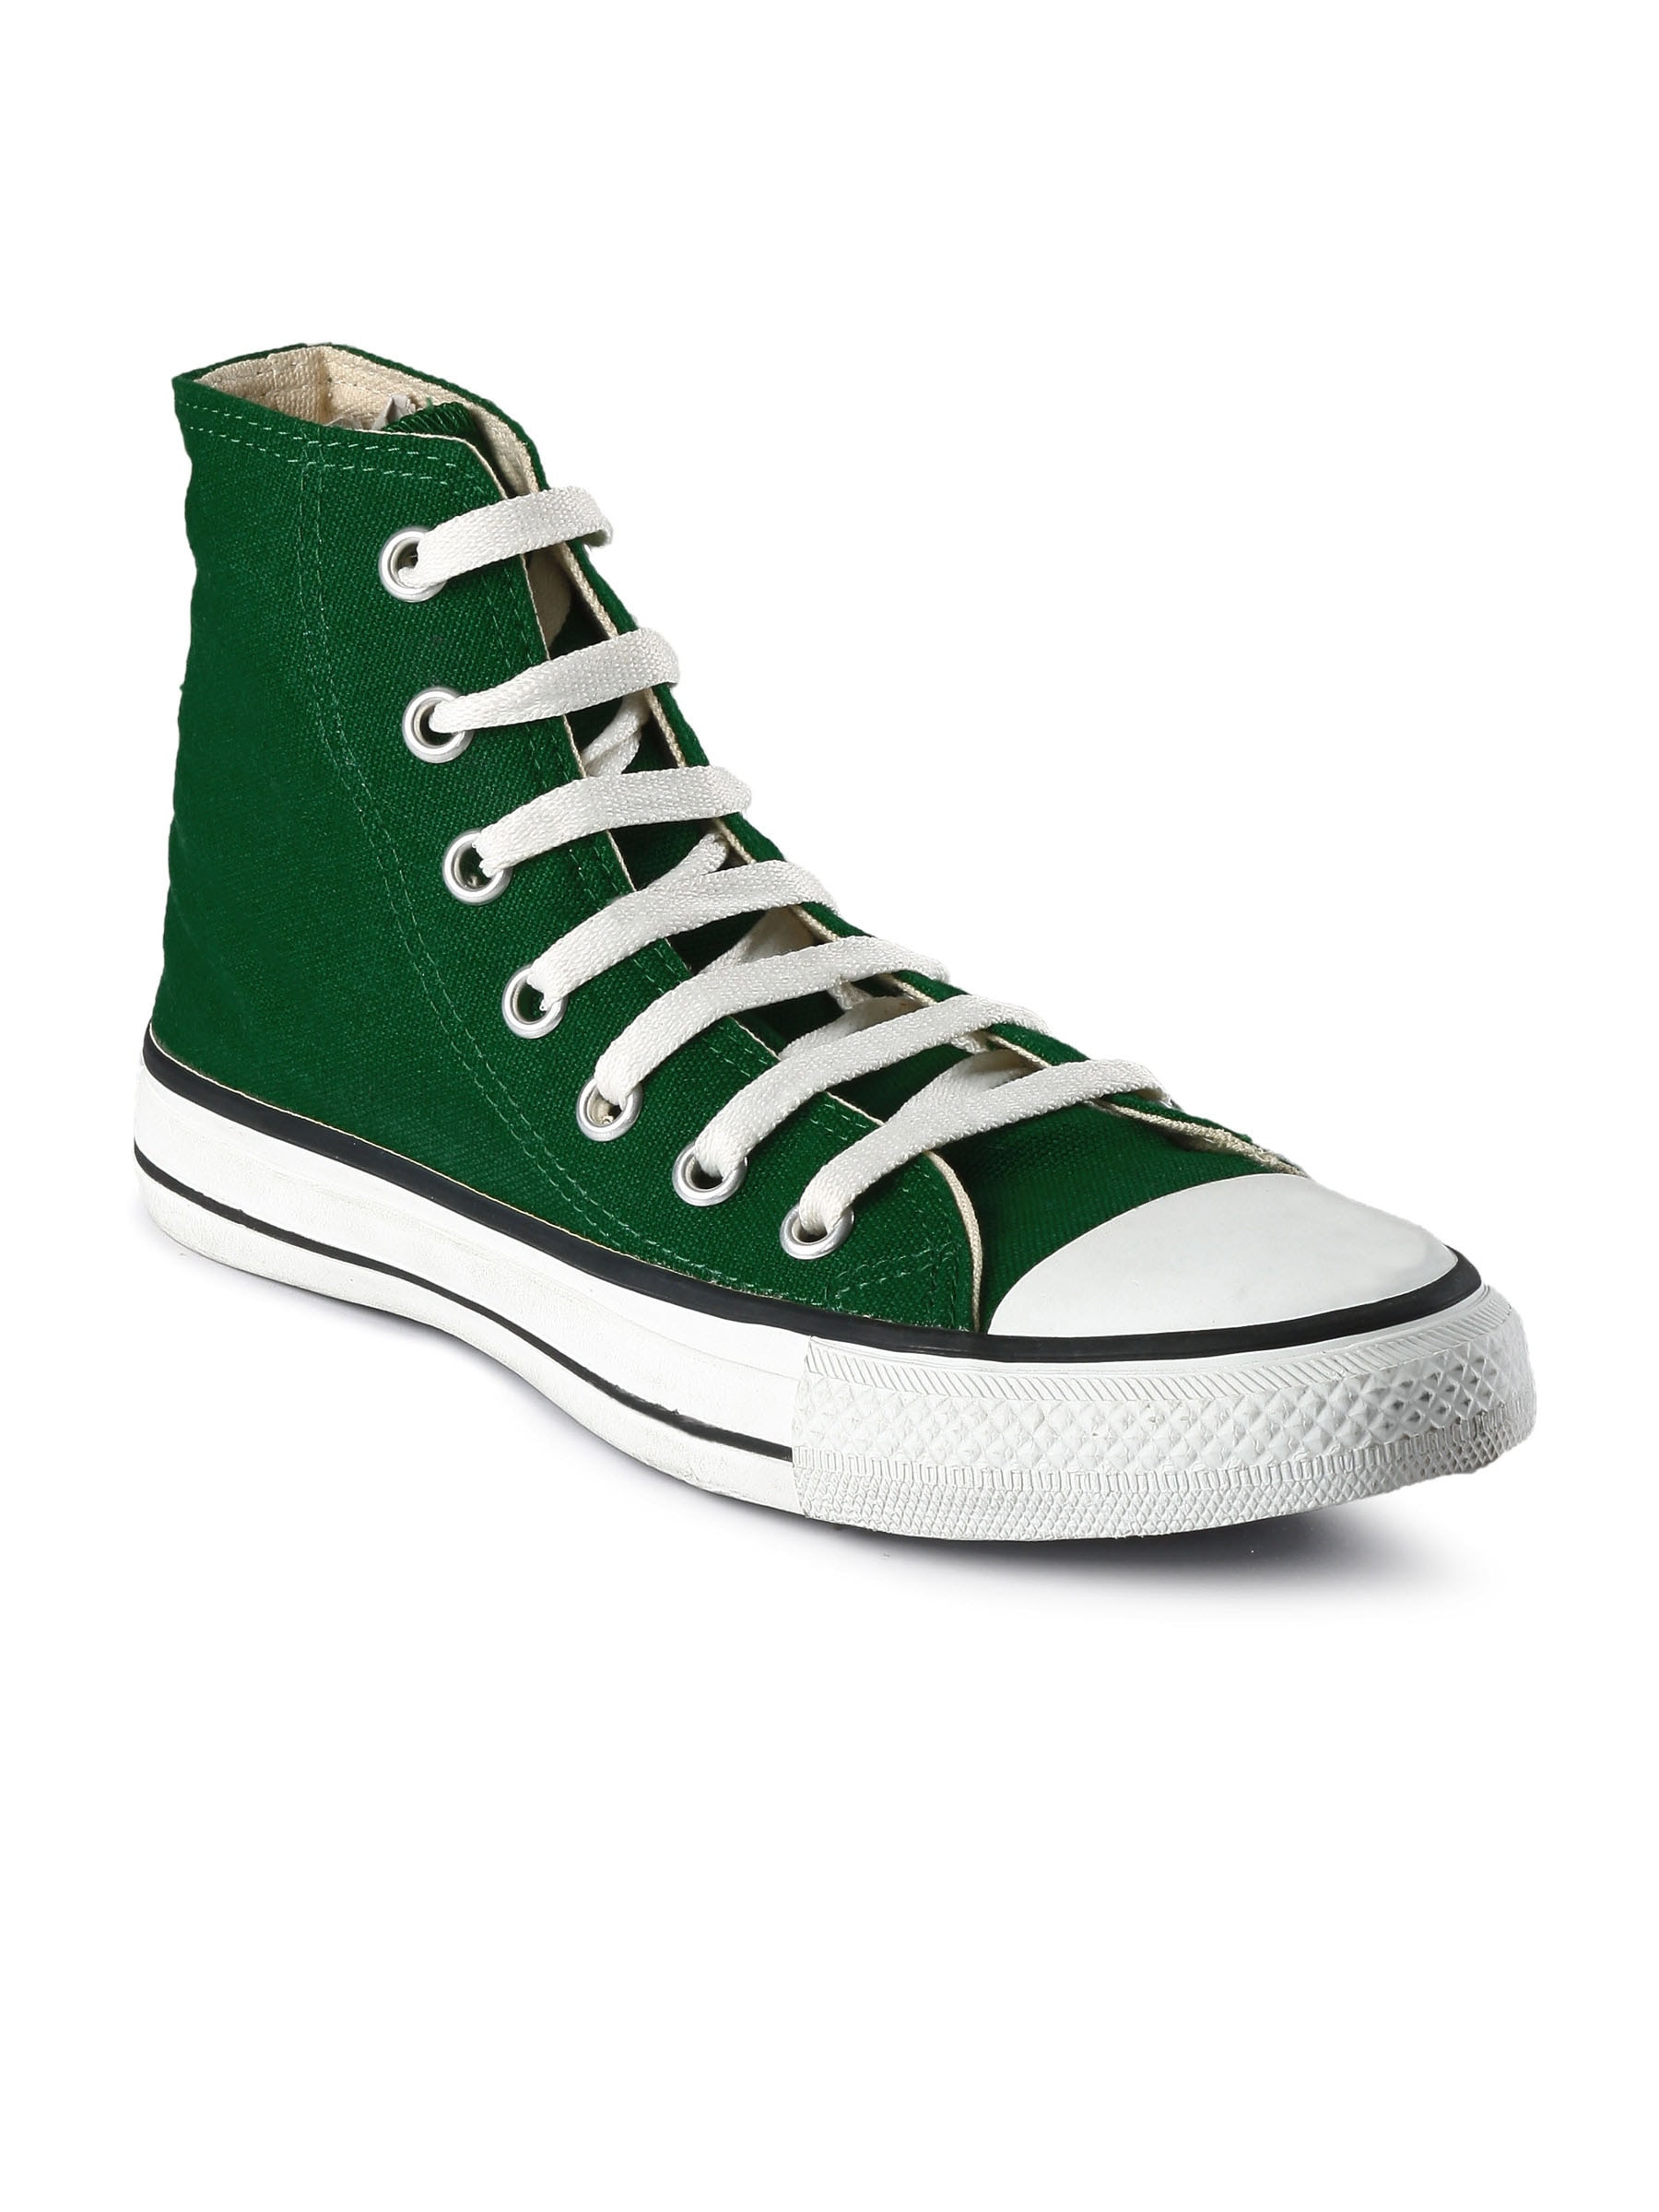 Converse Men As Canvas Hi Green Shoe